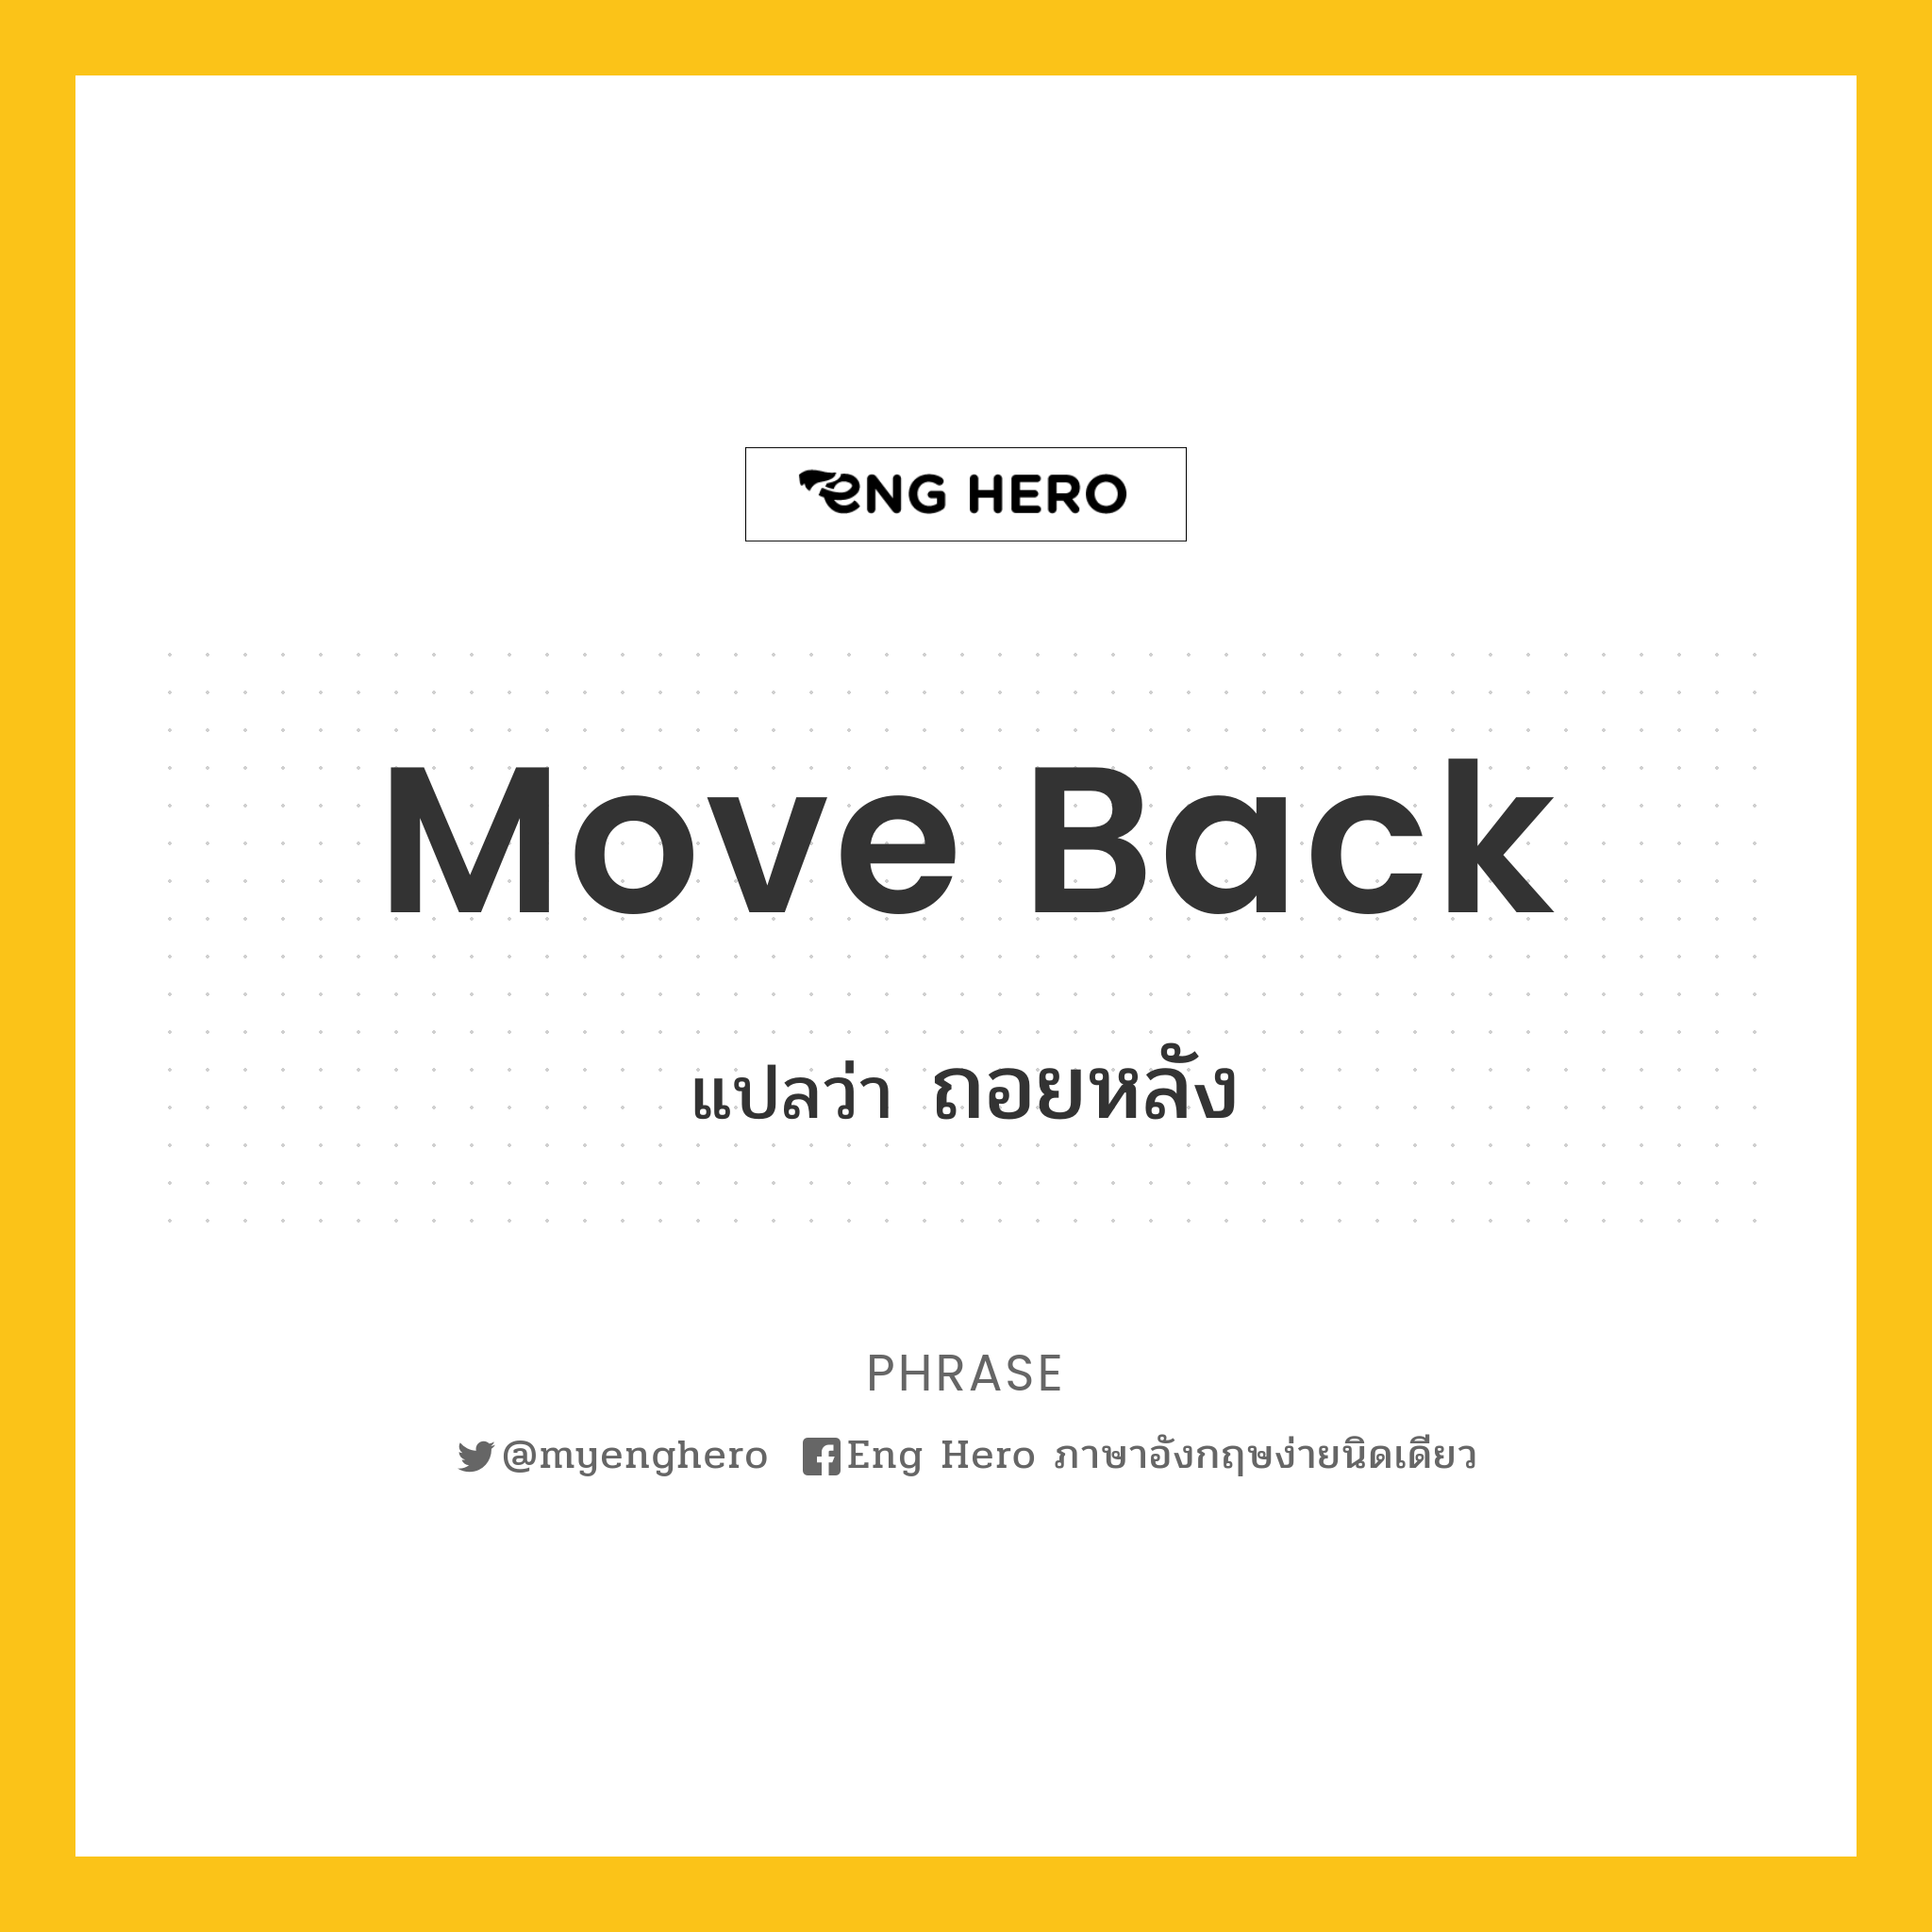 Move back